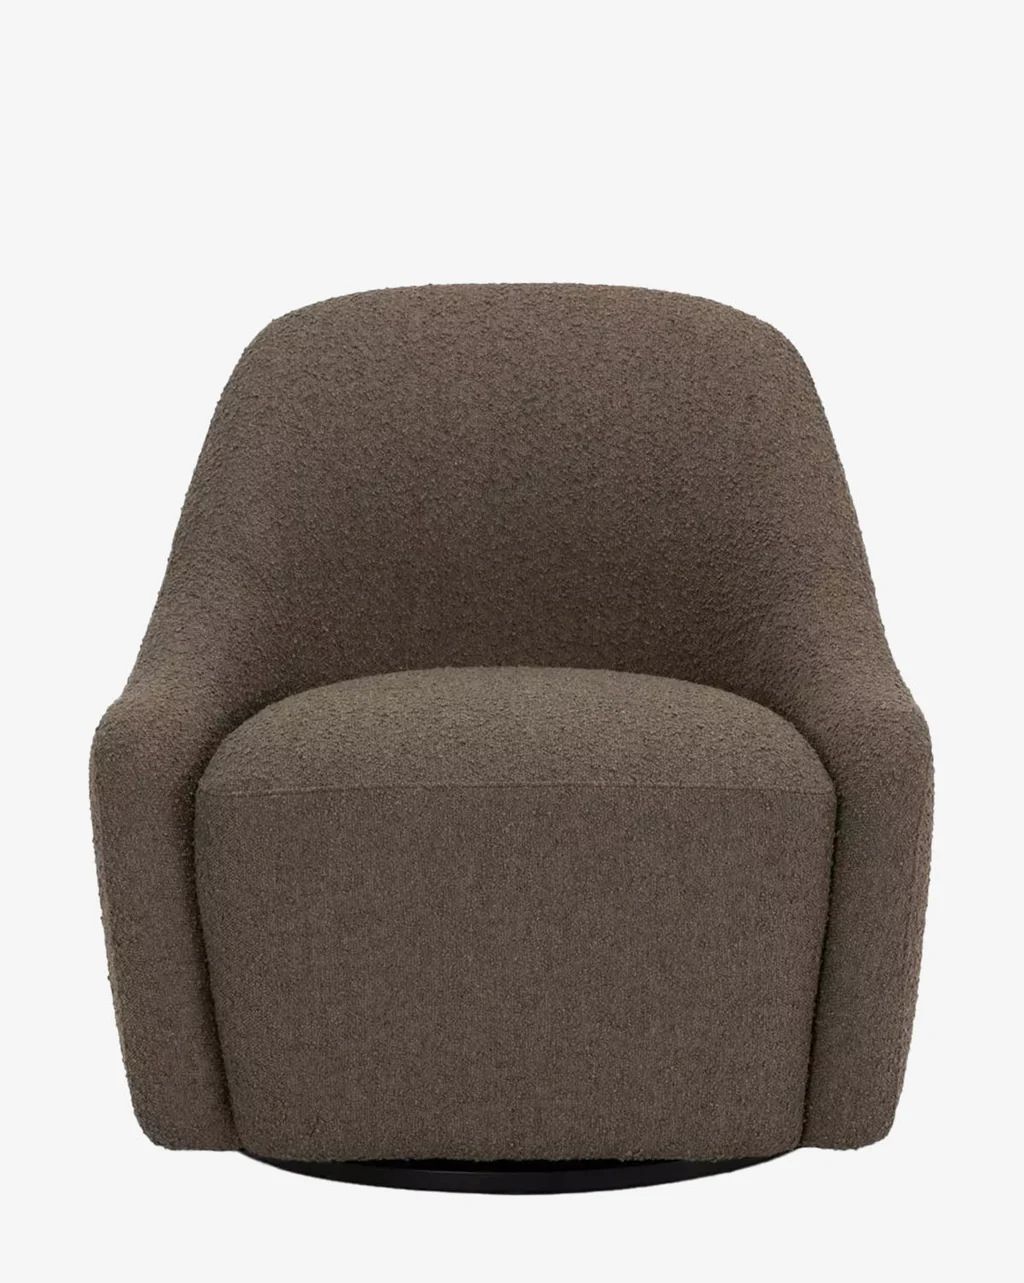 Noelani Swivel Chair | McGee & Co.